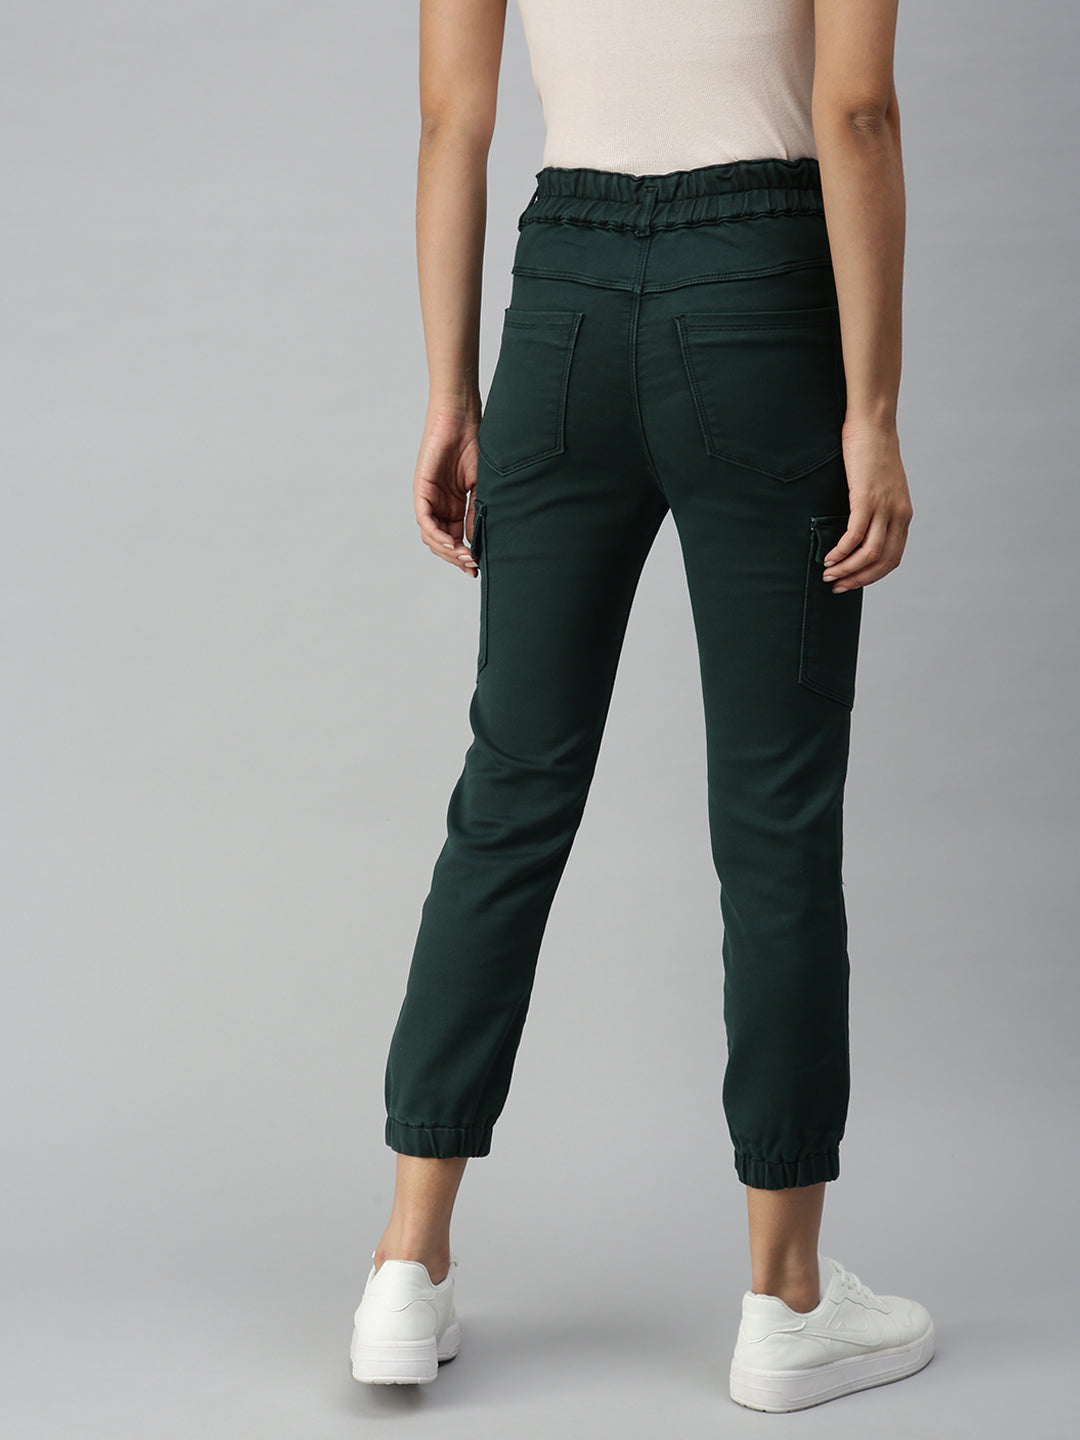 Women's Green Solid Denim Jeans